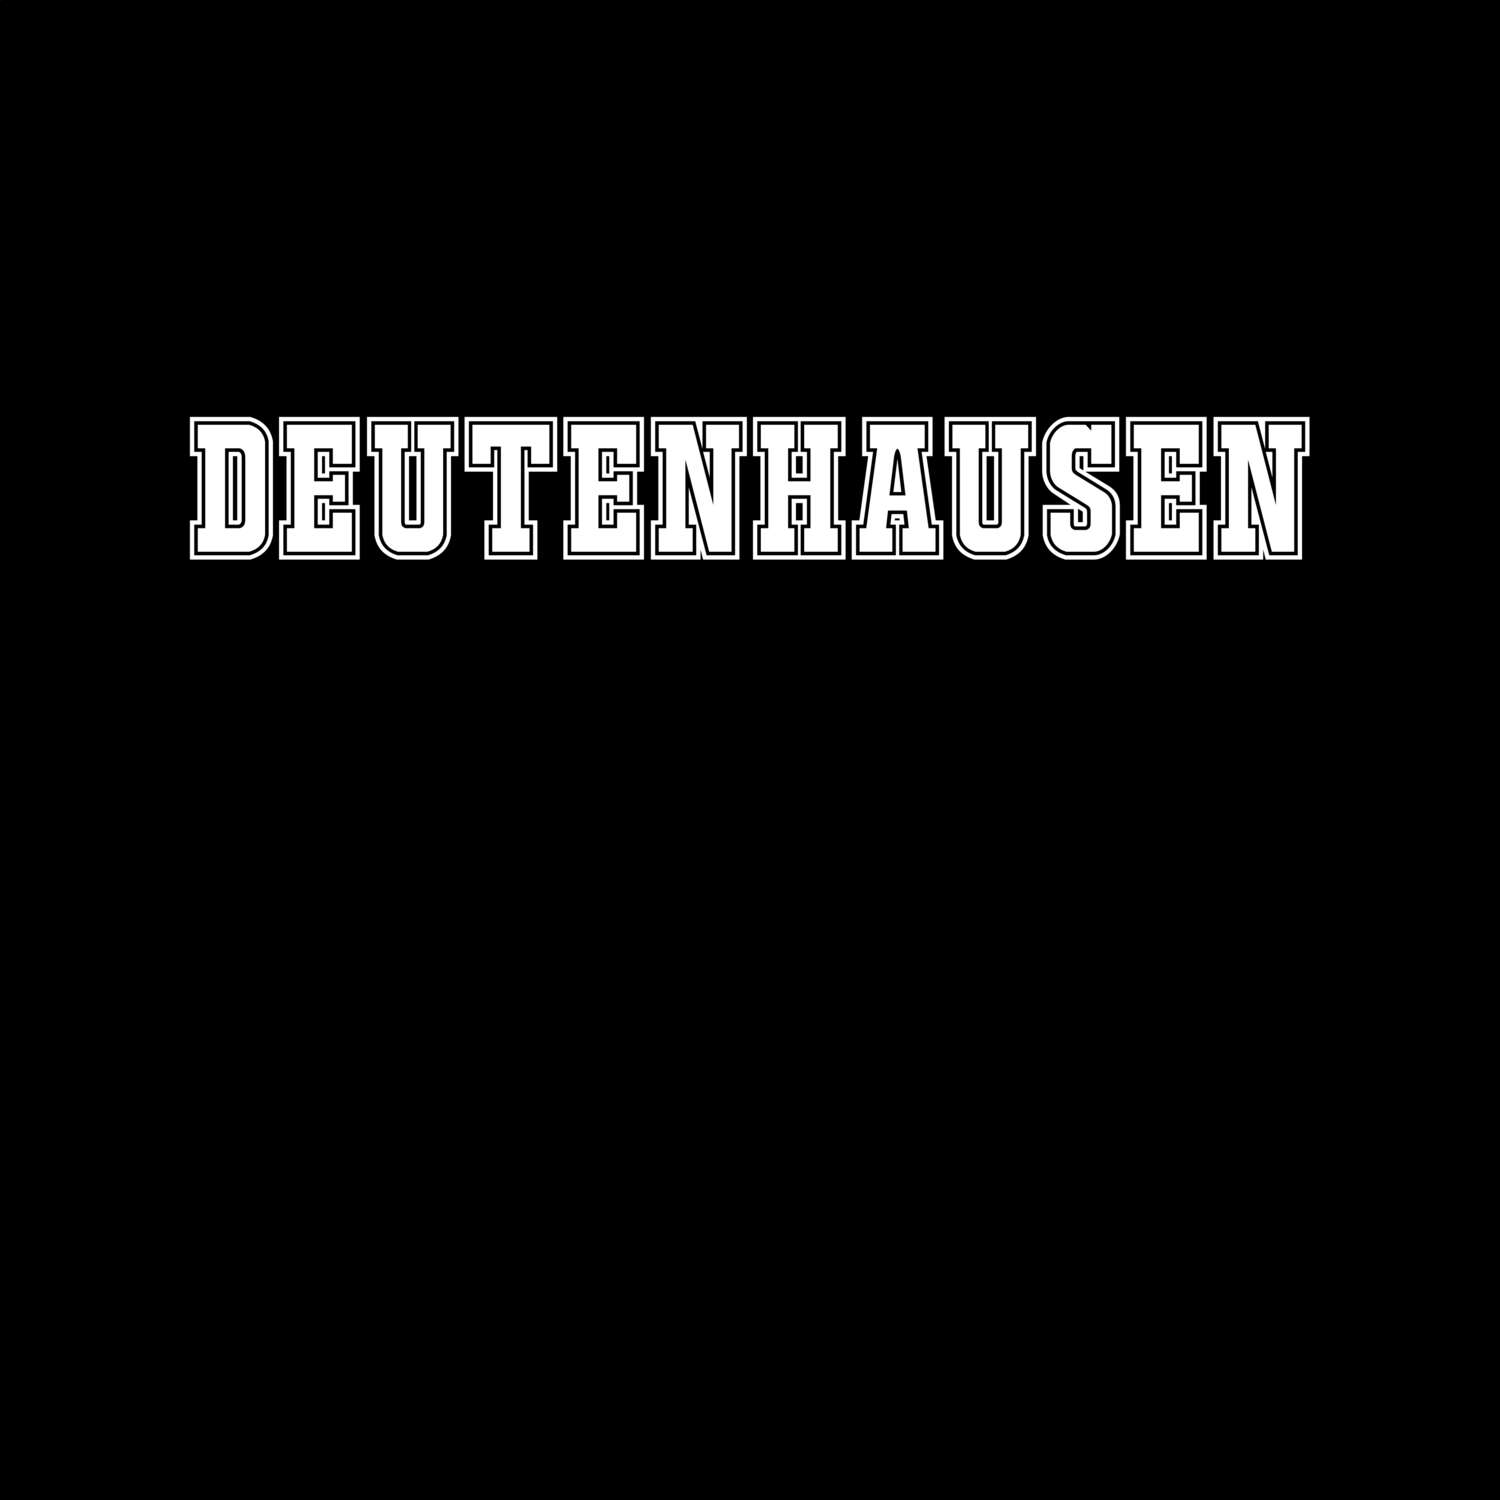 Deutenhausen T-Shirt »Classic«